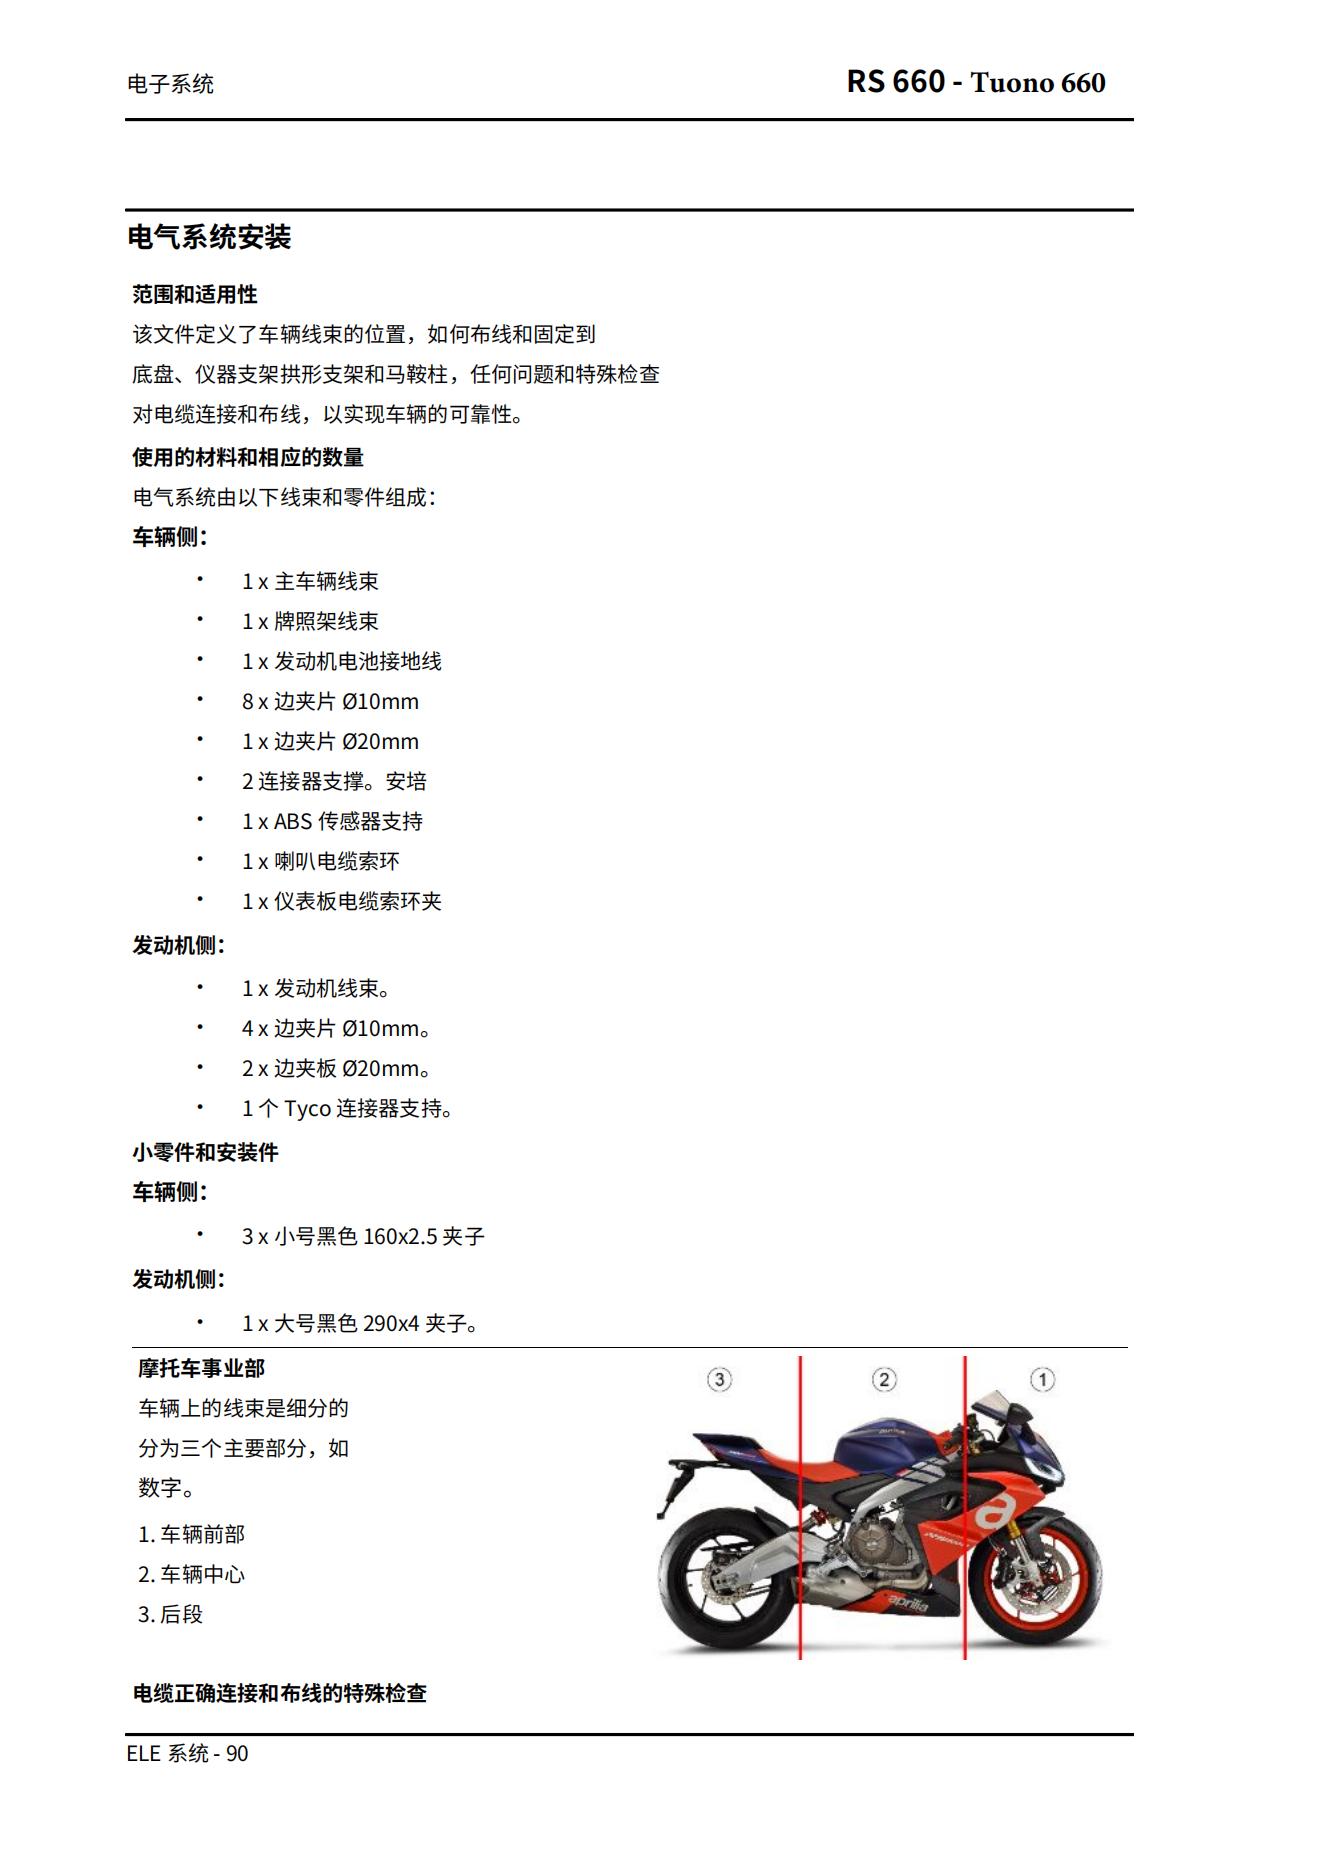 简体中文2021阿普利亚RS660维修手册(含高清电路图)通用tuono660插图1